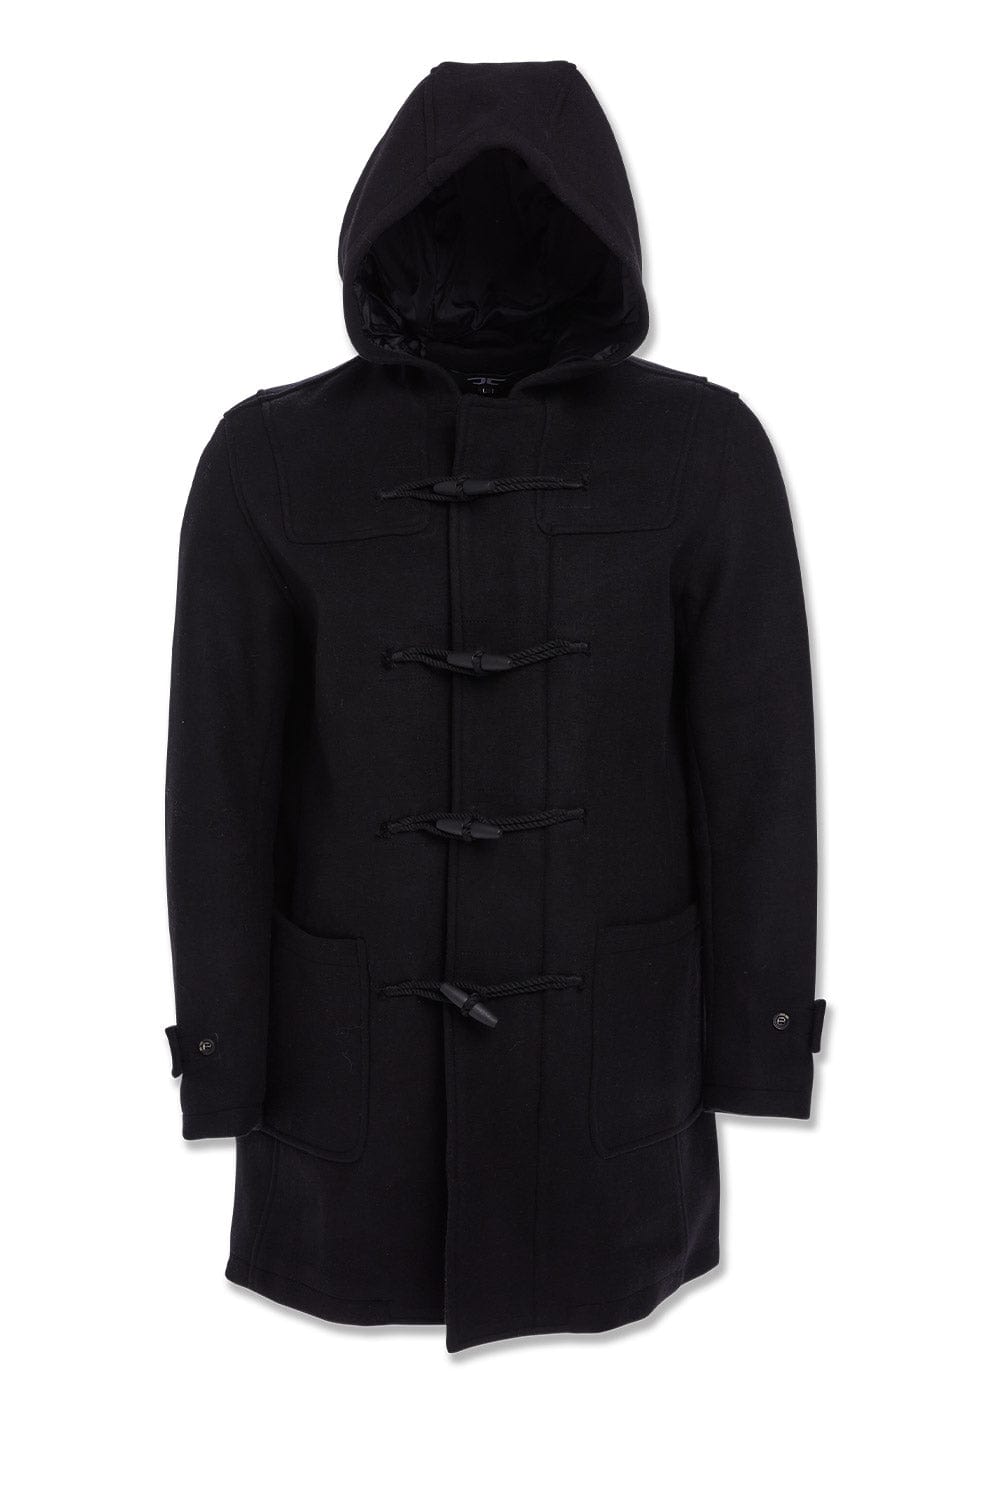 Jordan Craig Ottawa Duffle Coat (Black) S / Black